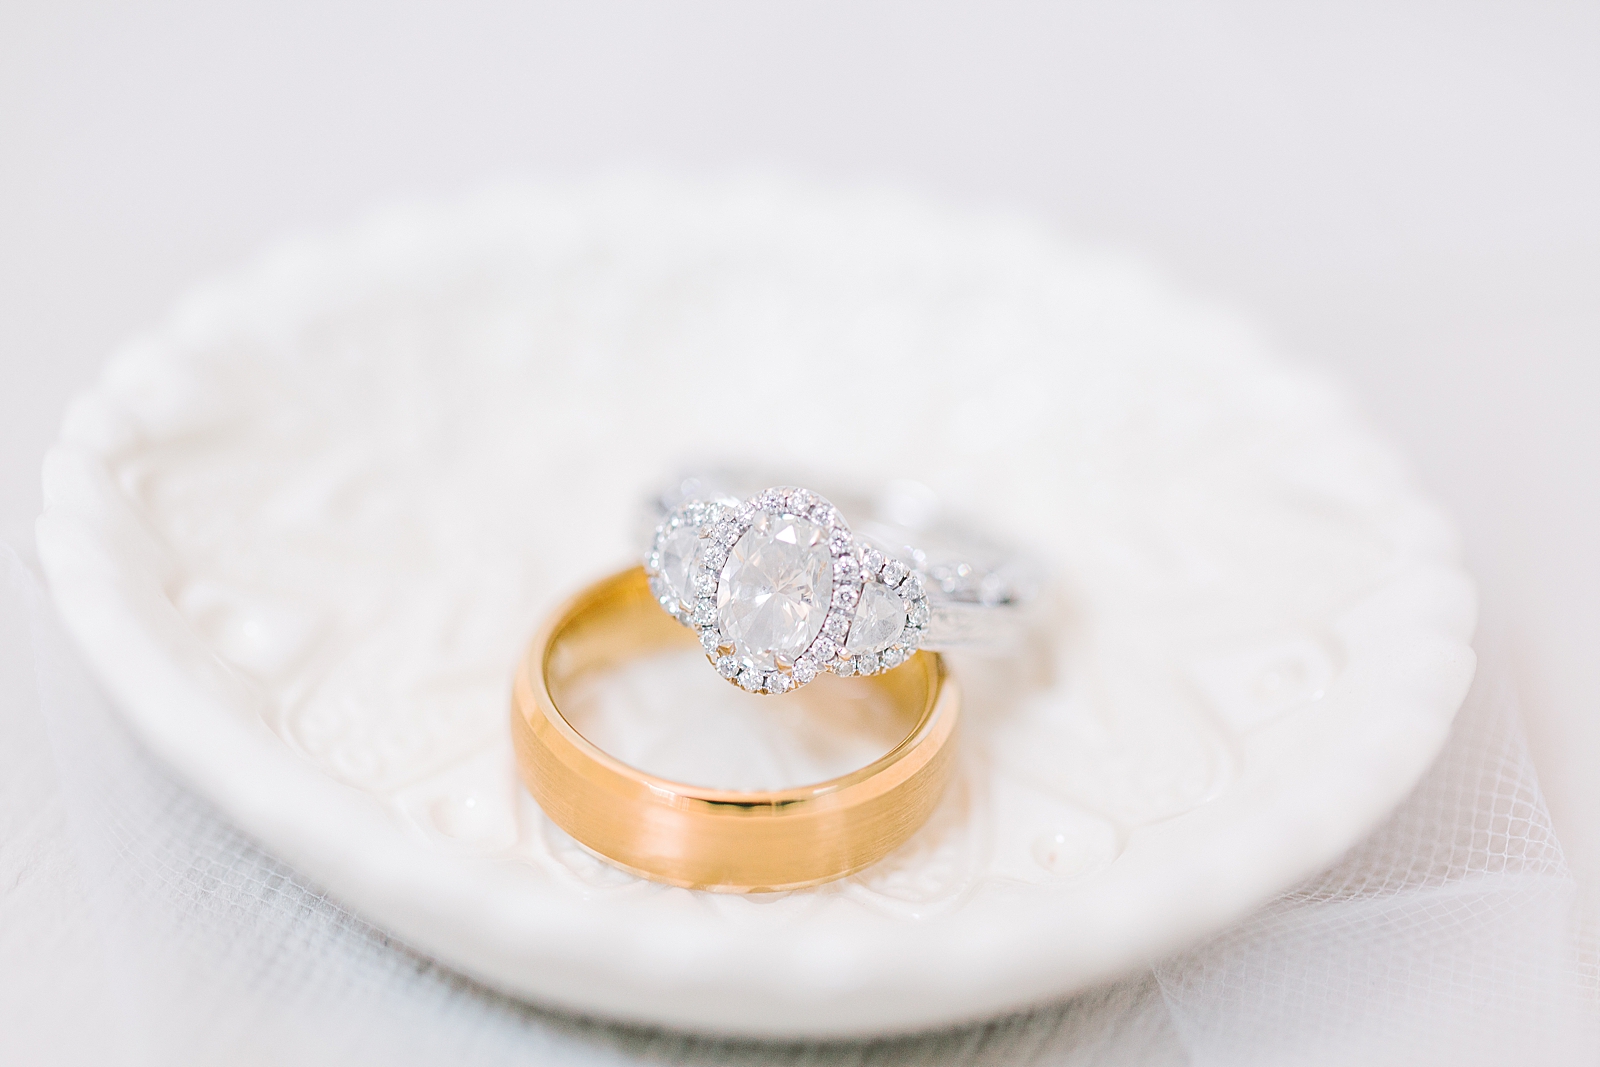 Winmock Wedding Rings in a Ring Dish Photo